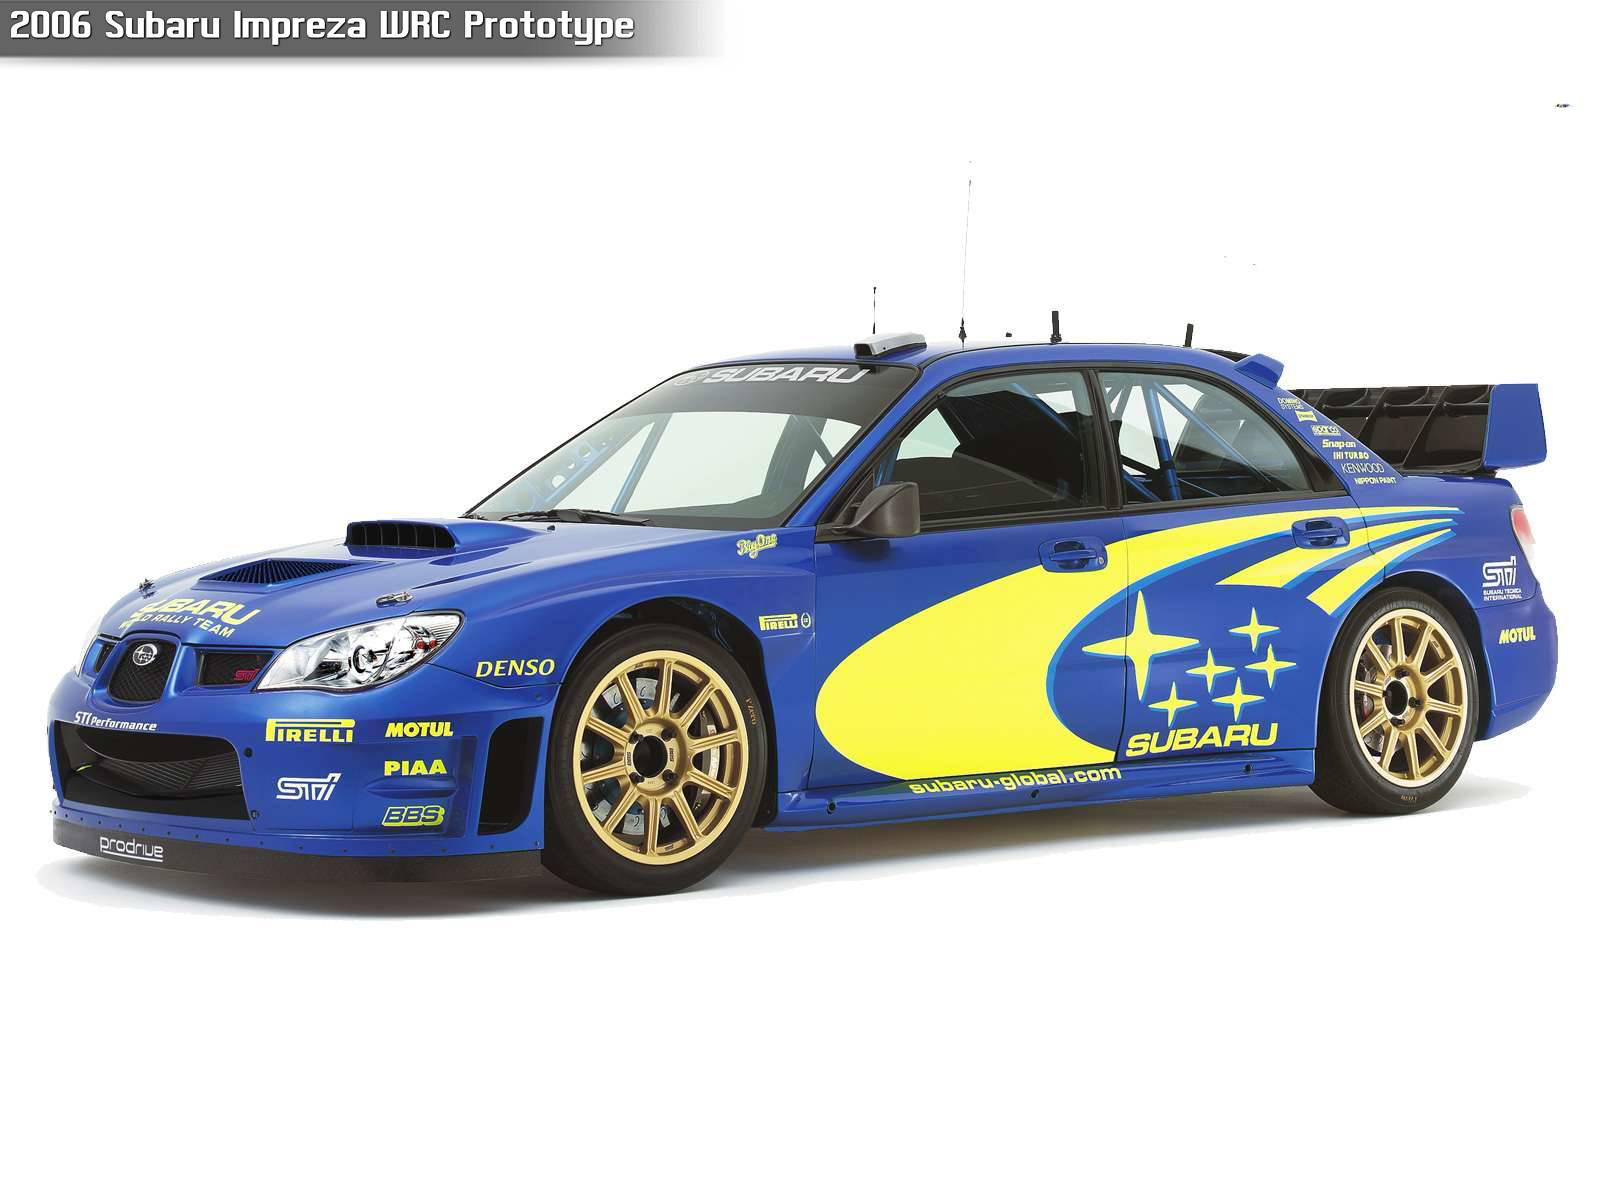 Subaru-Impreza_WRC_Prototype-2006-1600-02.jpg